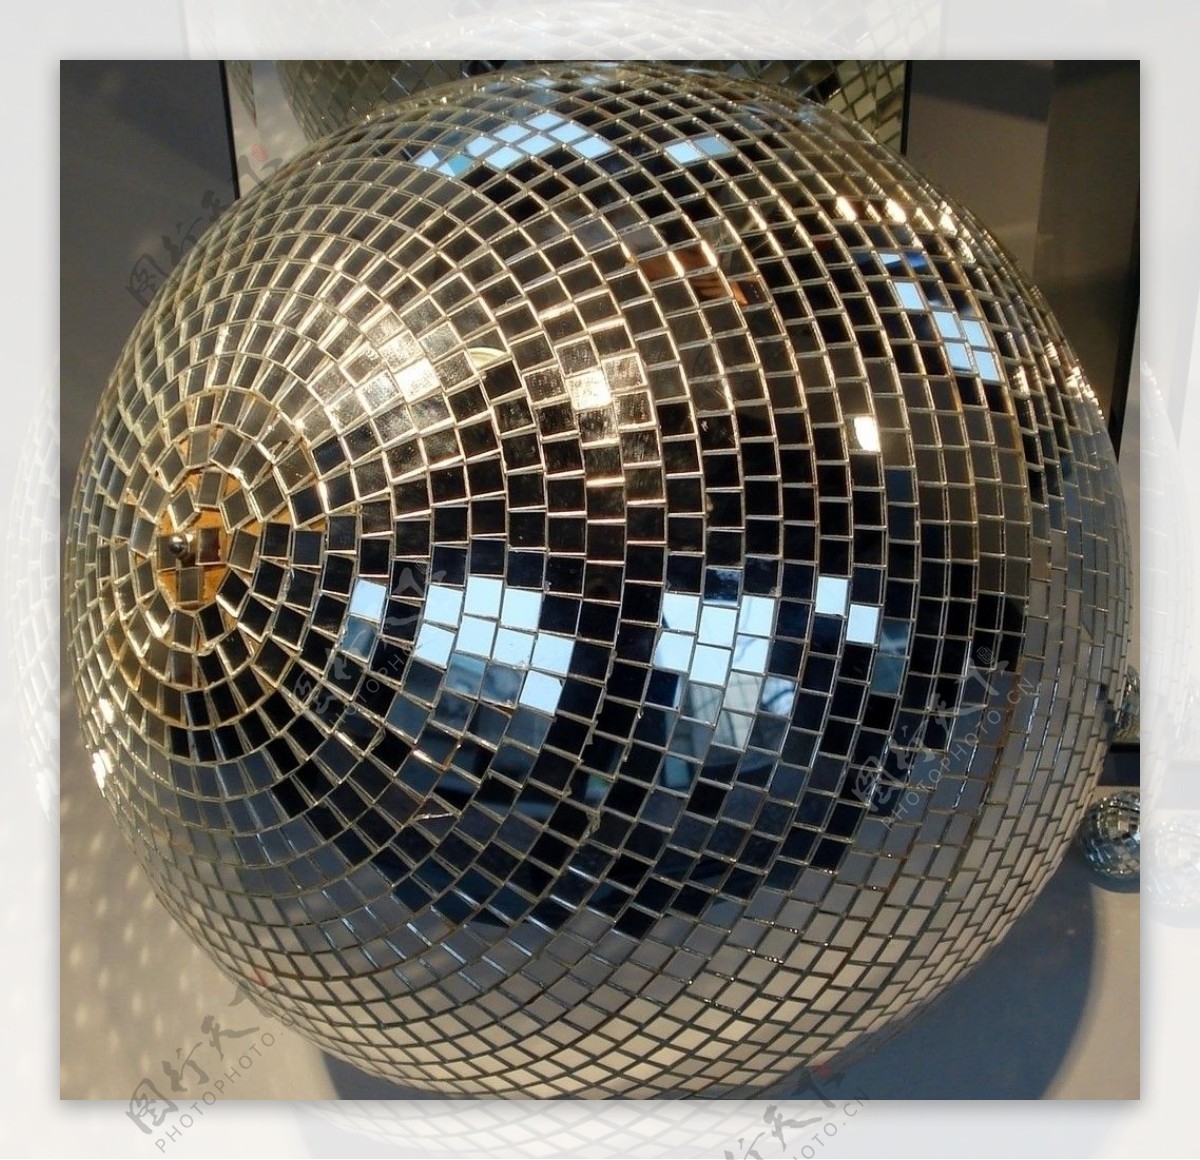 discoball镜球图片